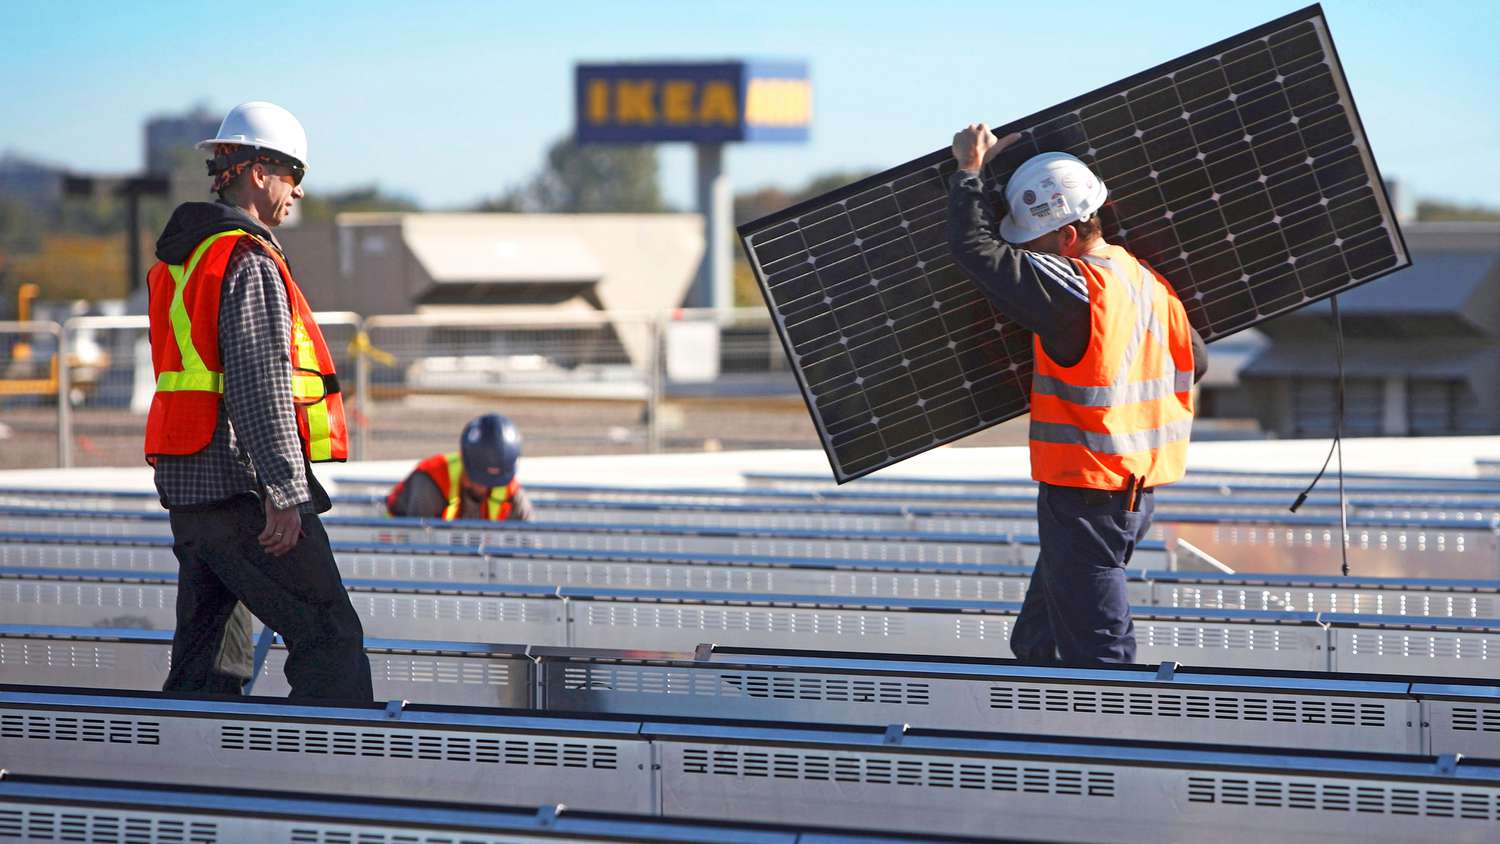 Ikea installing solar panels on rooftop